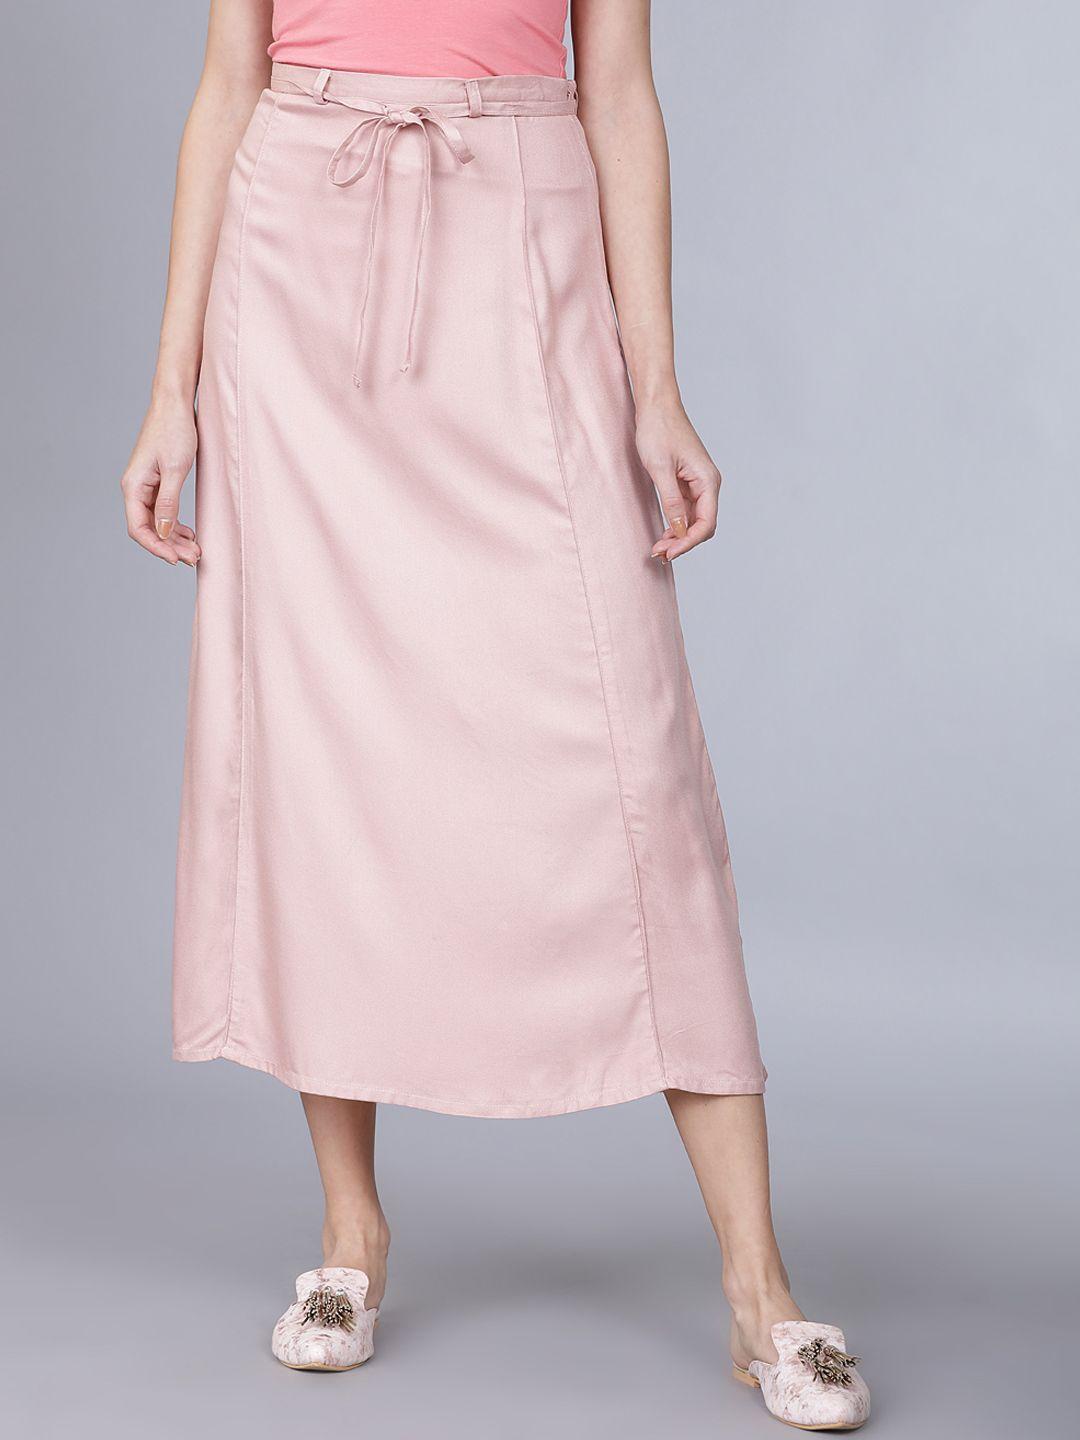 tokyo-talkies-women-pink-solid-a-line-midi-skirt